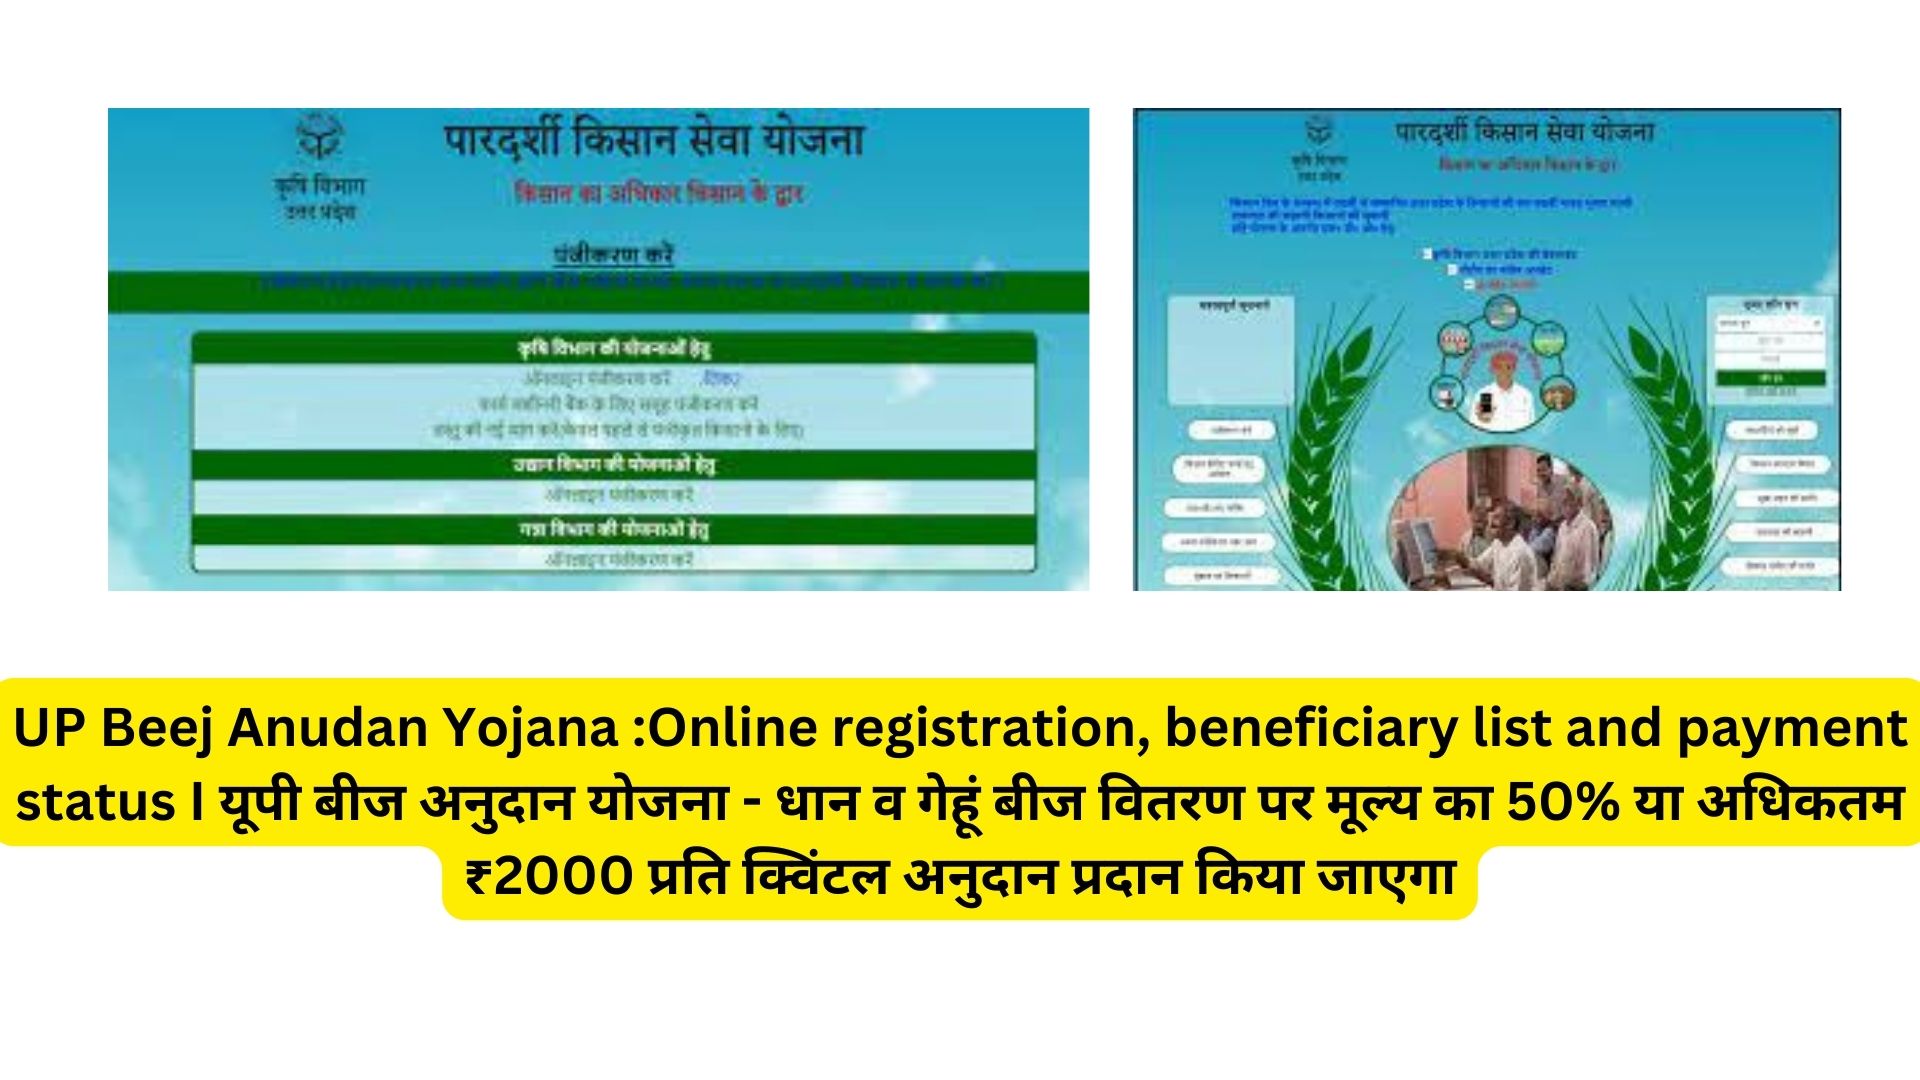 UP Beej Anudan Yojana :Online registration, beneficiary list and payment status I यूपी बीज अनुदान योजना - धान व गेहूं बीज वितरण पर मूल्य का 50% या अधिकतम ₹2000 प्रति क्विंटल अनुदान प्रदान किया जाएगा